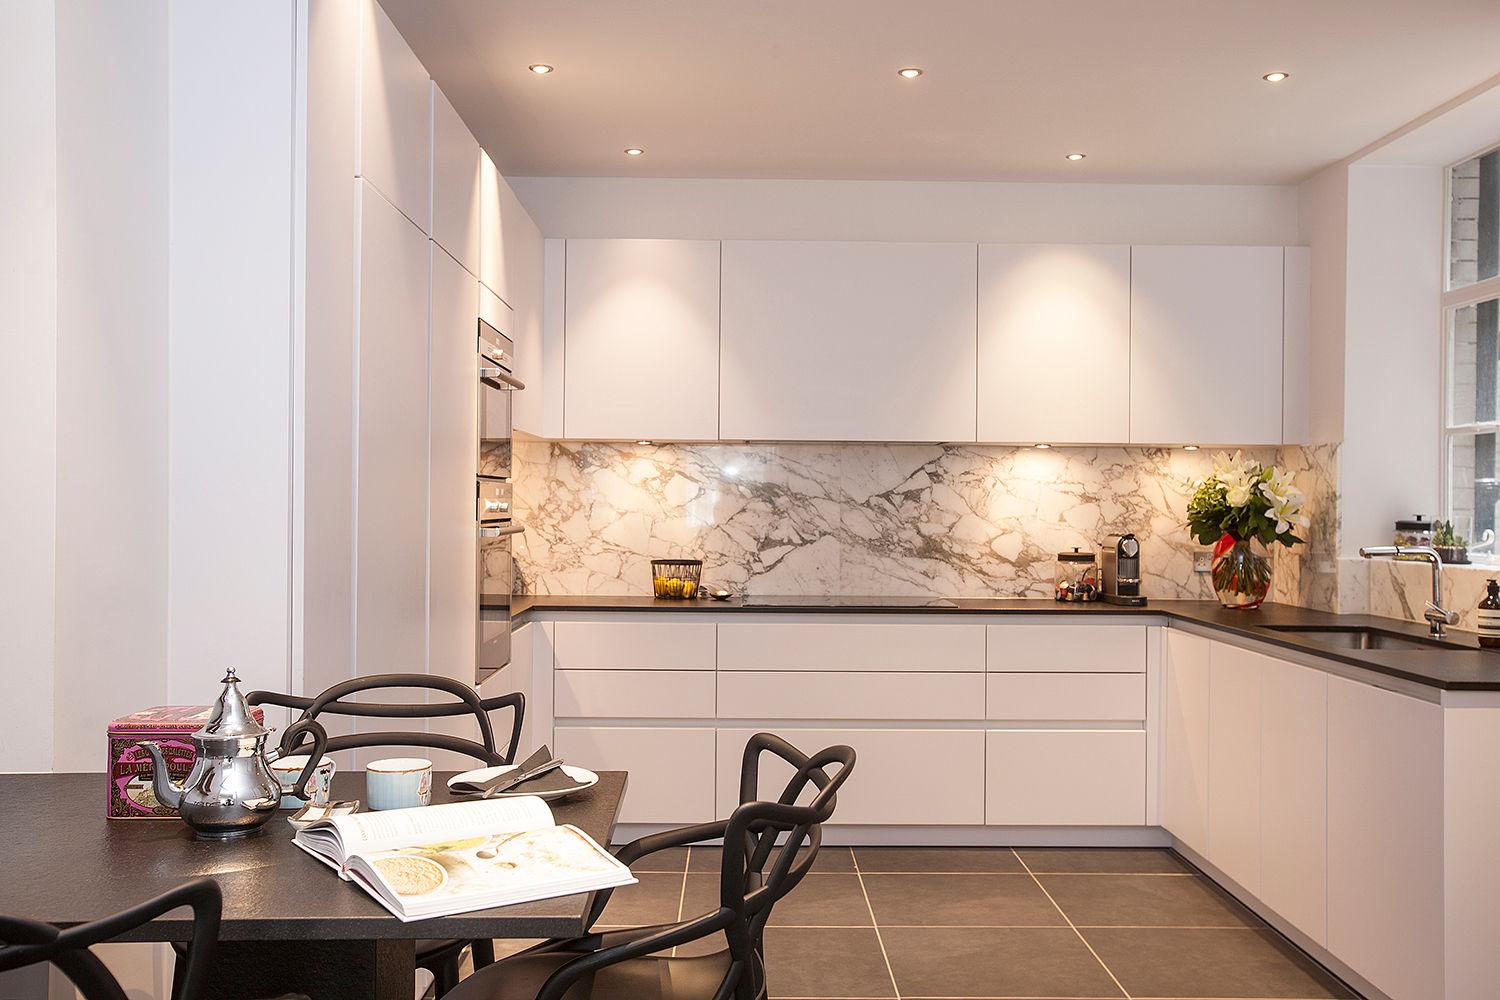 Kensington Church Street Kitchen - After SWM Interiors & Sourcing Ltd مطبخ